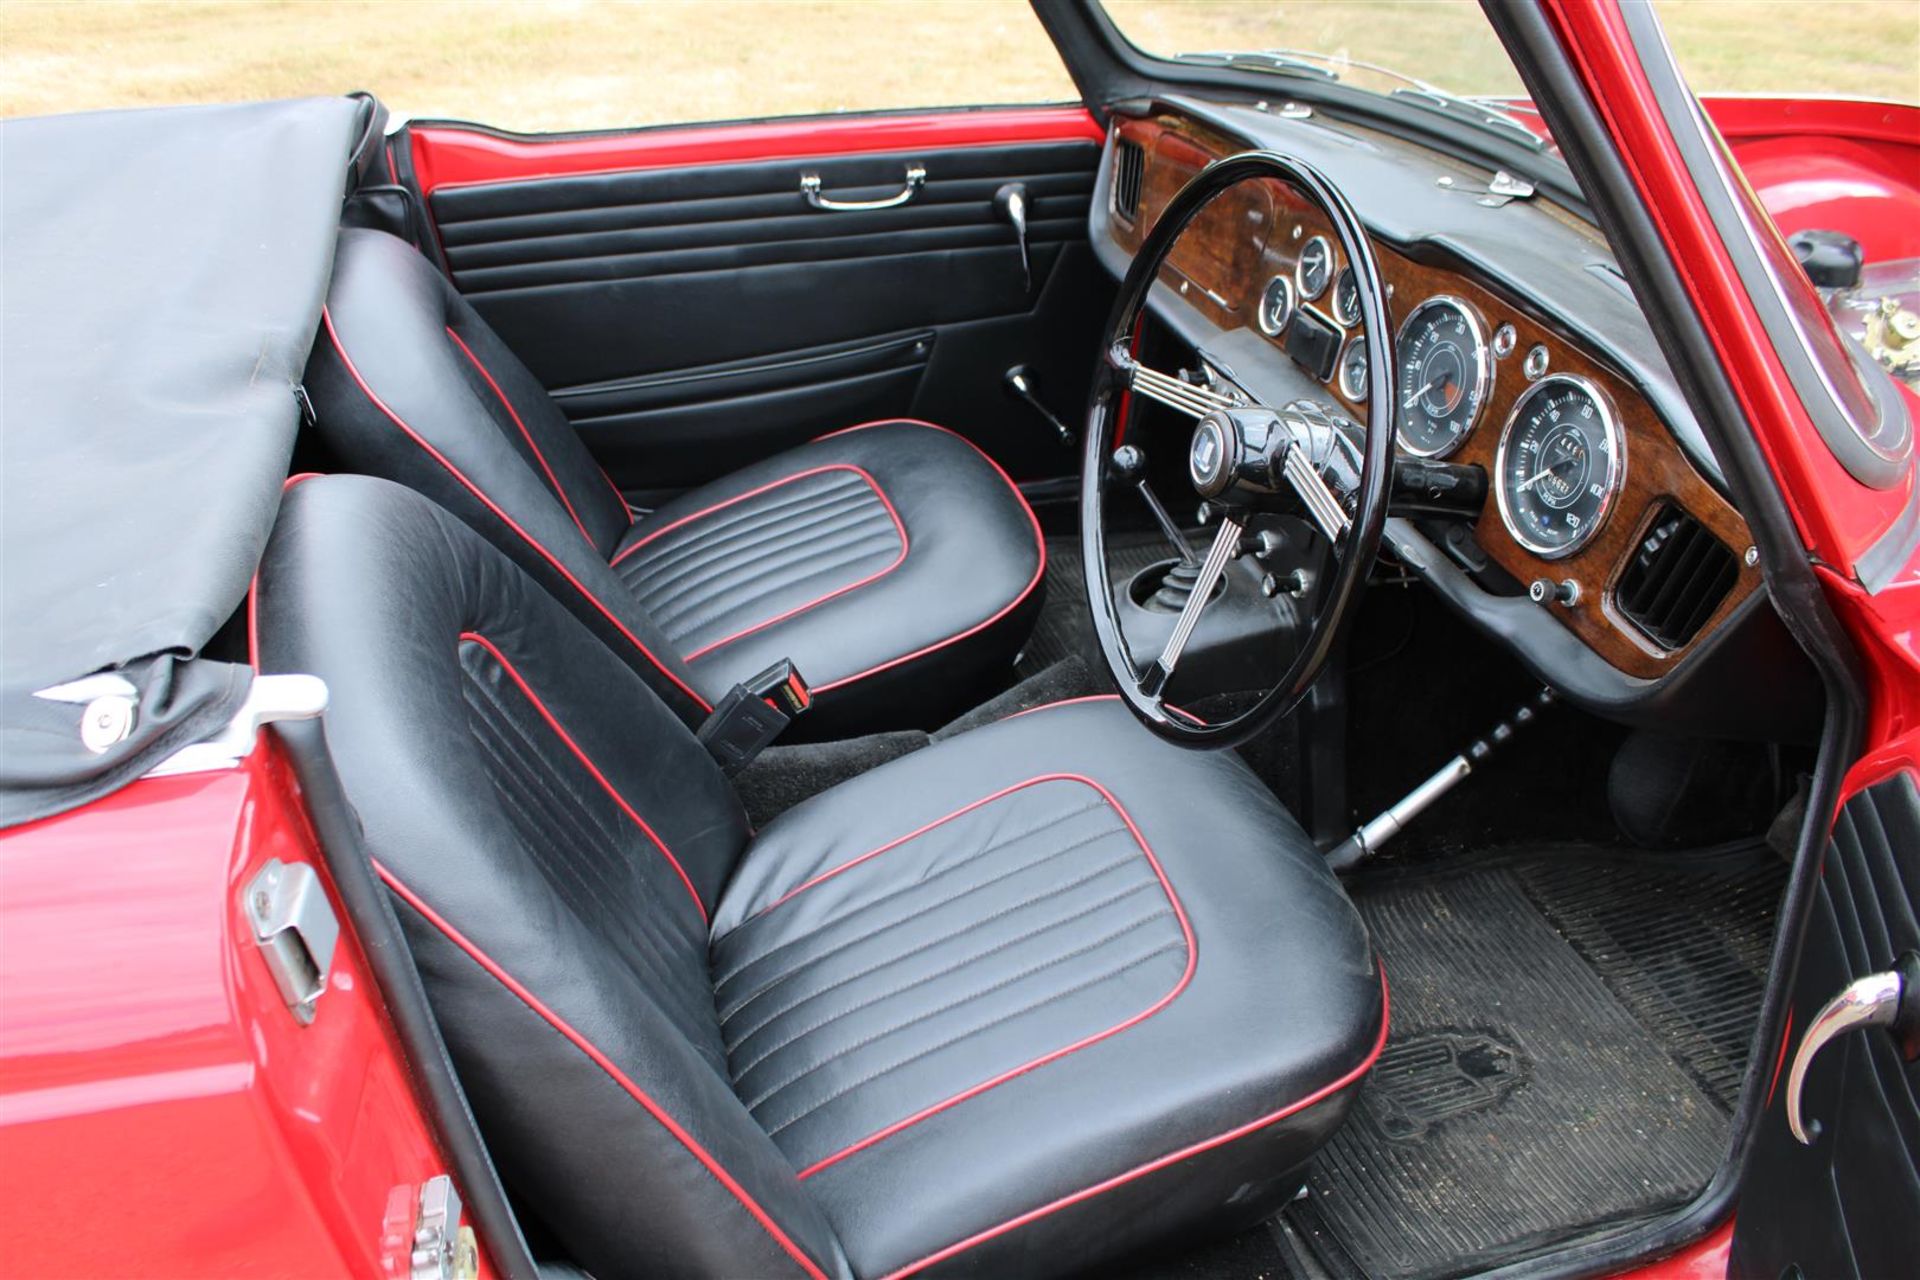 1964 Triumph TR4 - Image 7 of 22